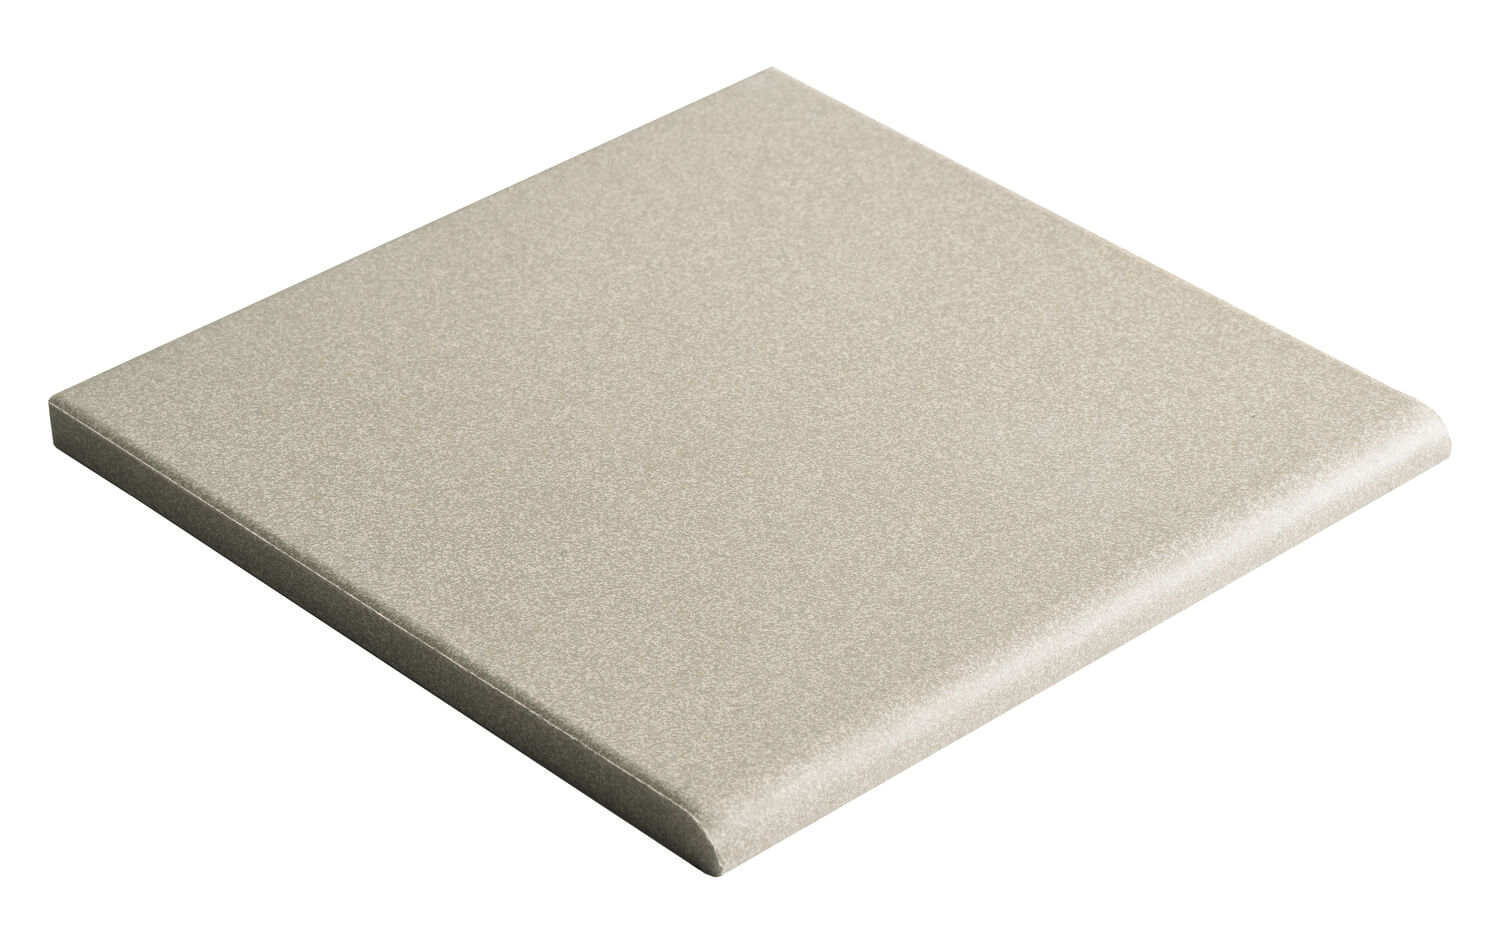 Dorset Woolliscroft Steel Grey Round Edge Slip Resistant Quarry Tile 148x148mm